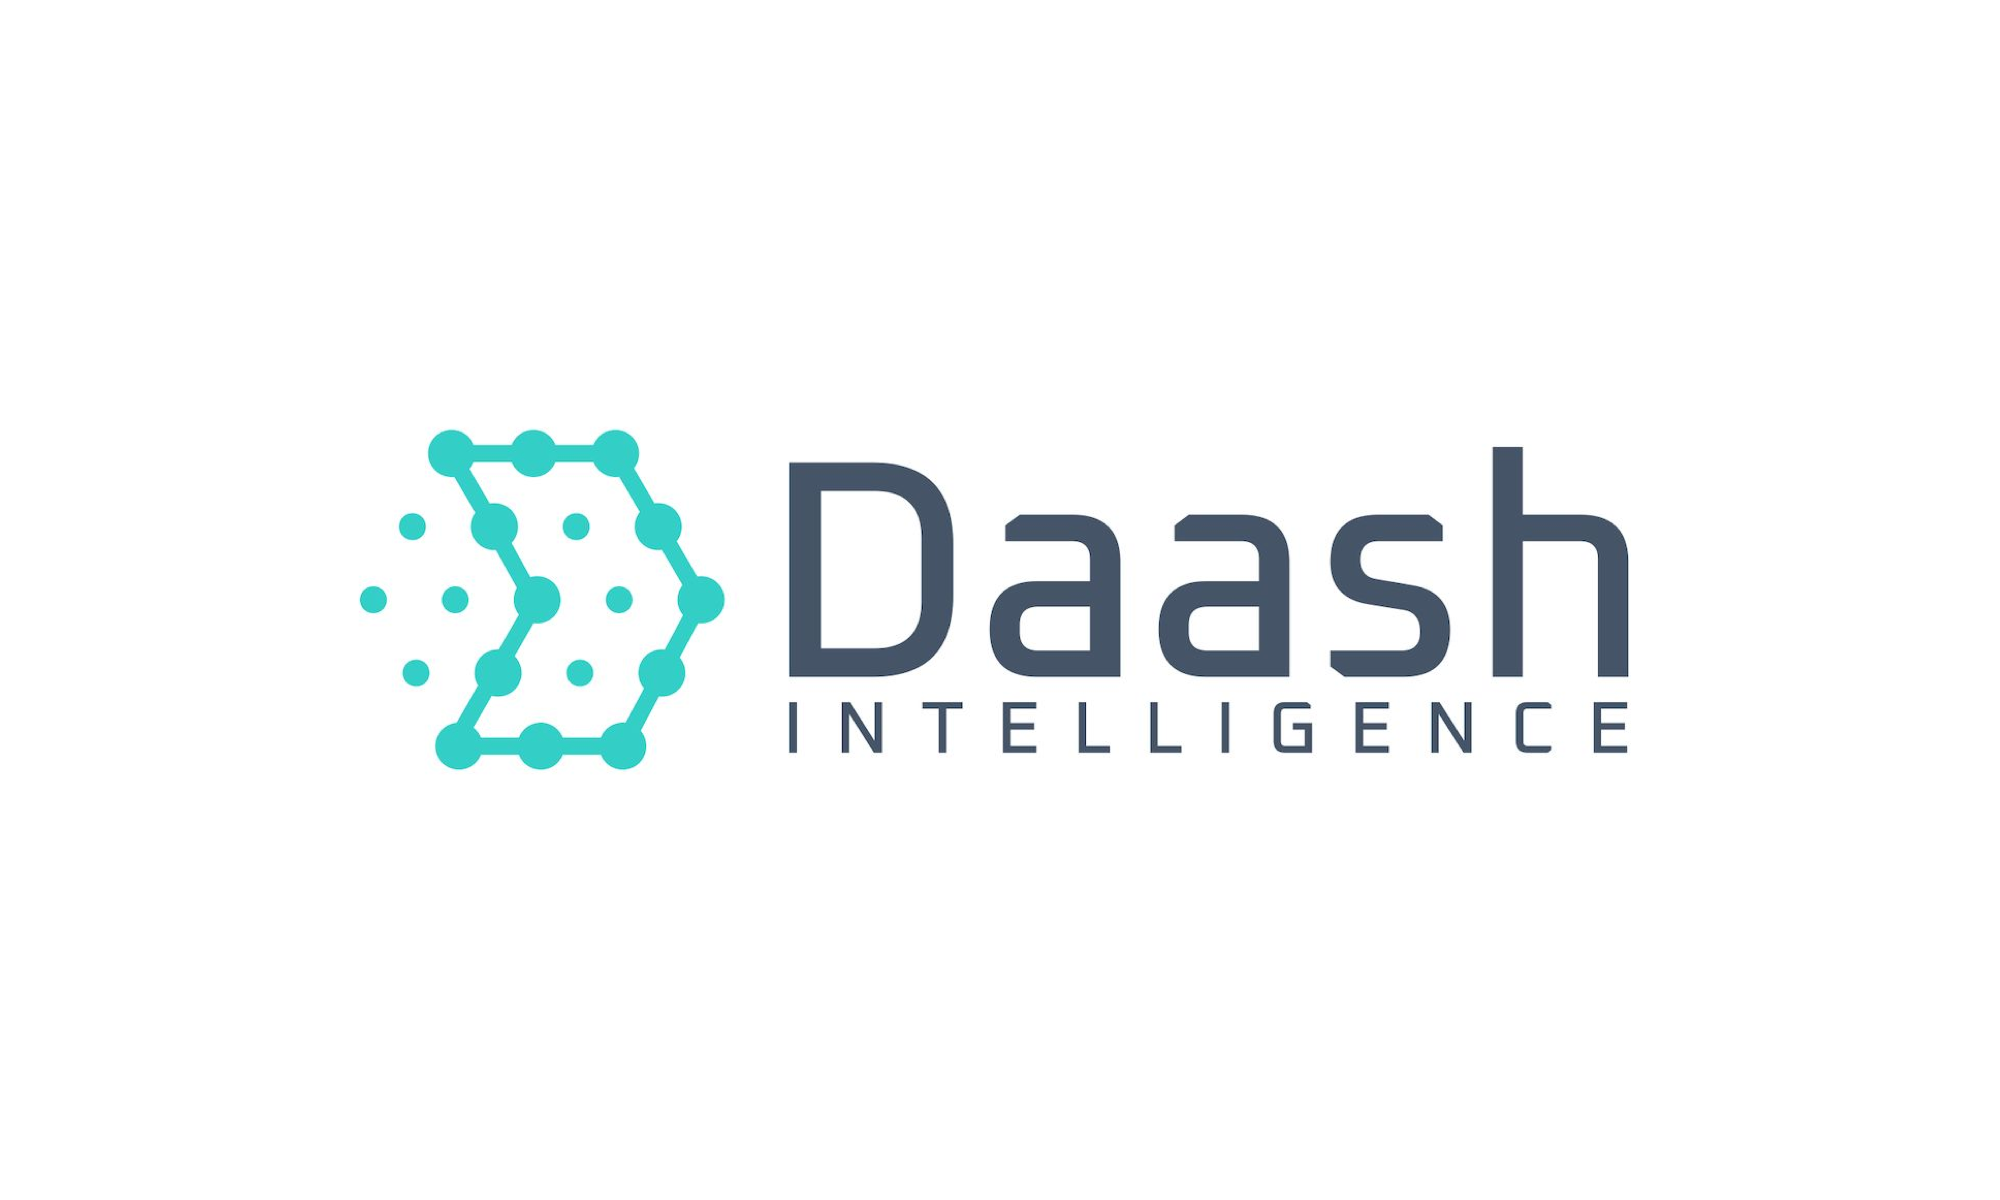 Daash Intelligence